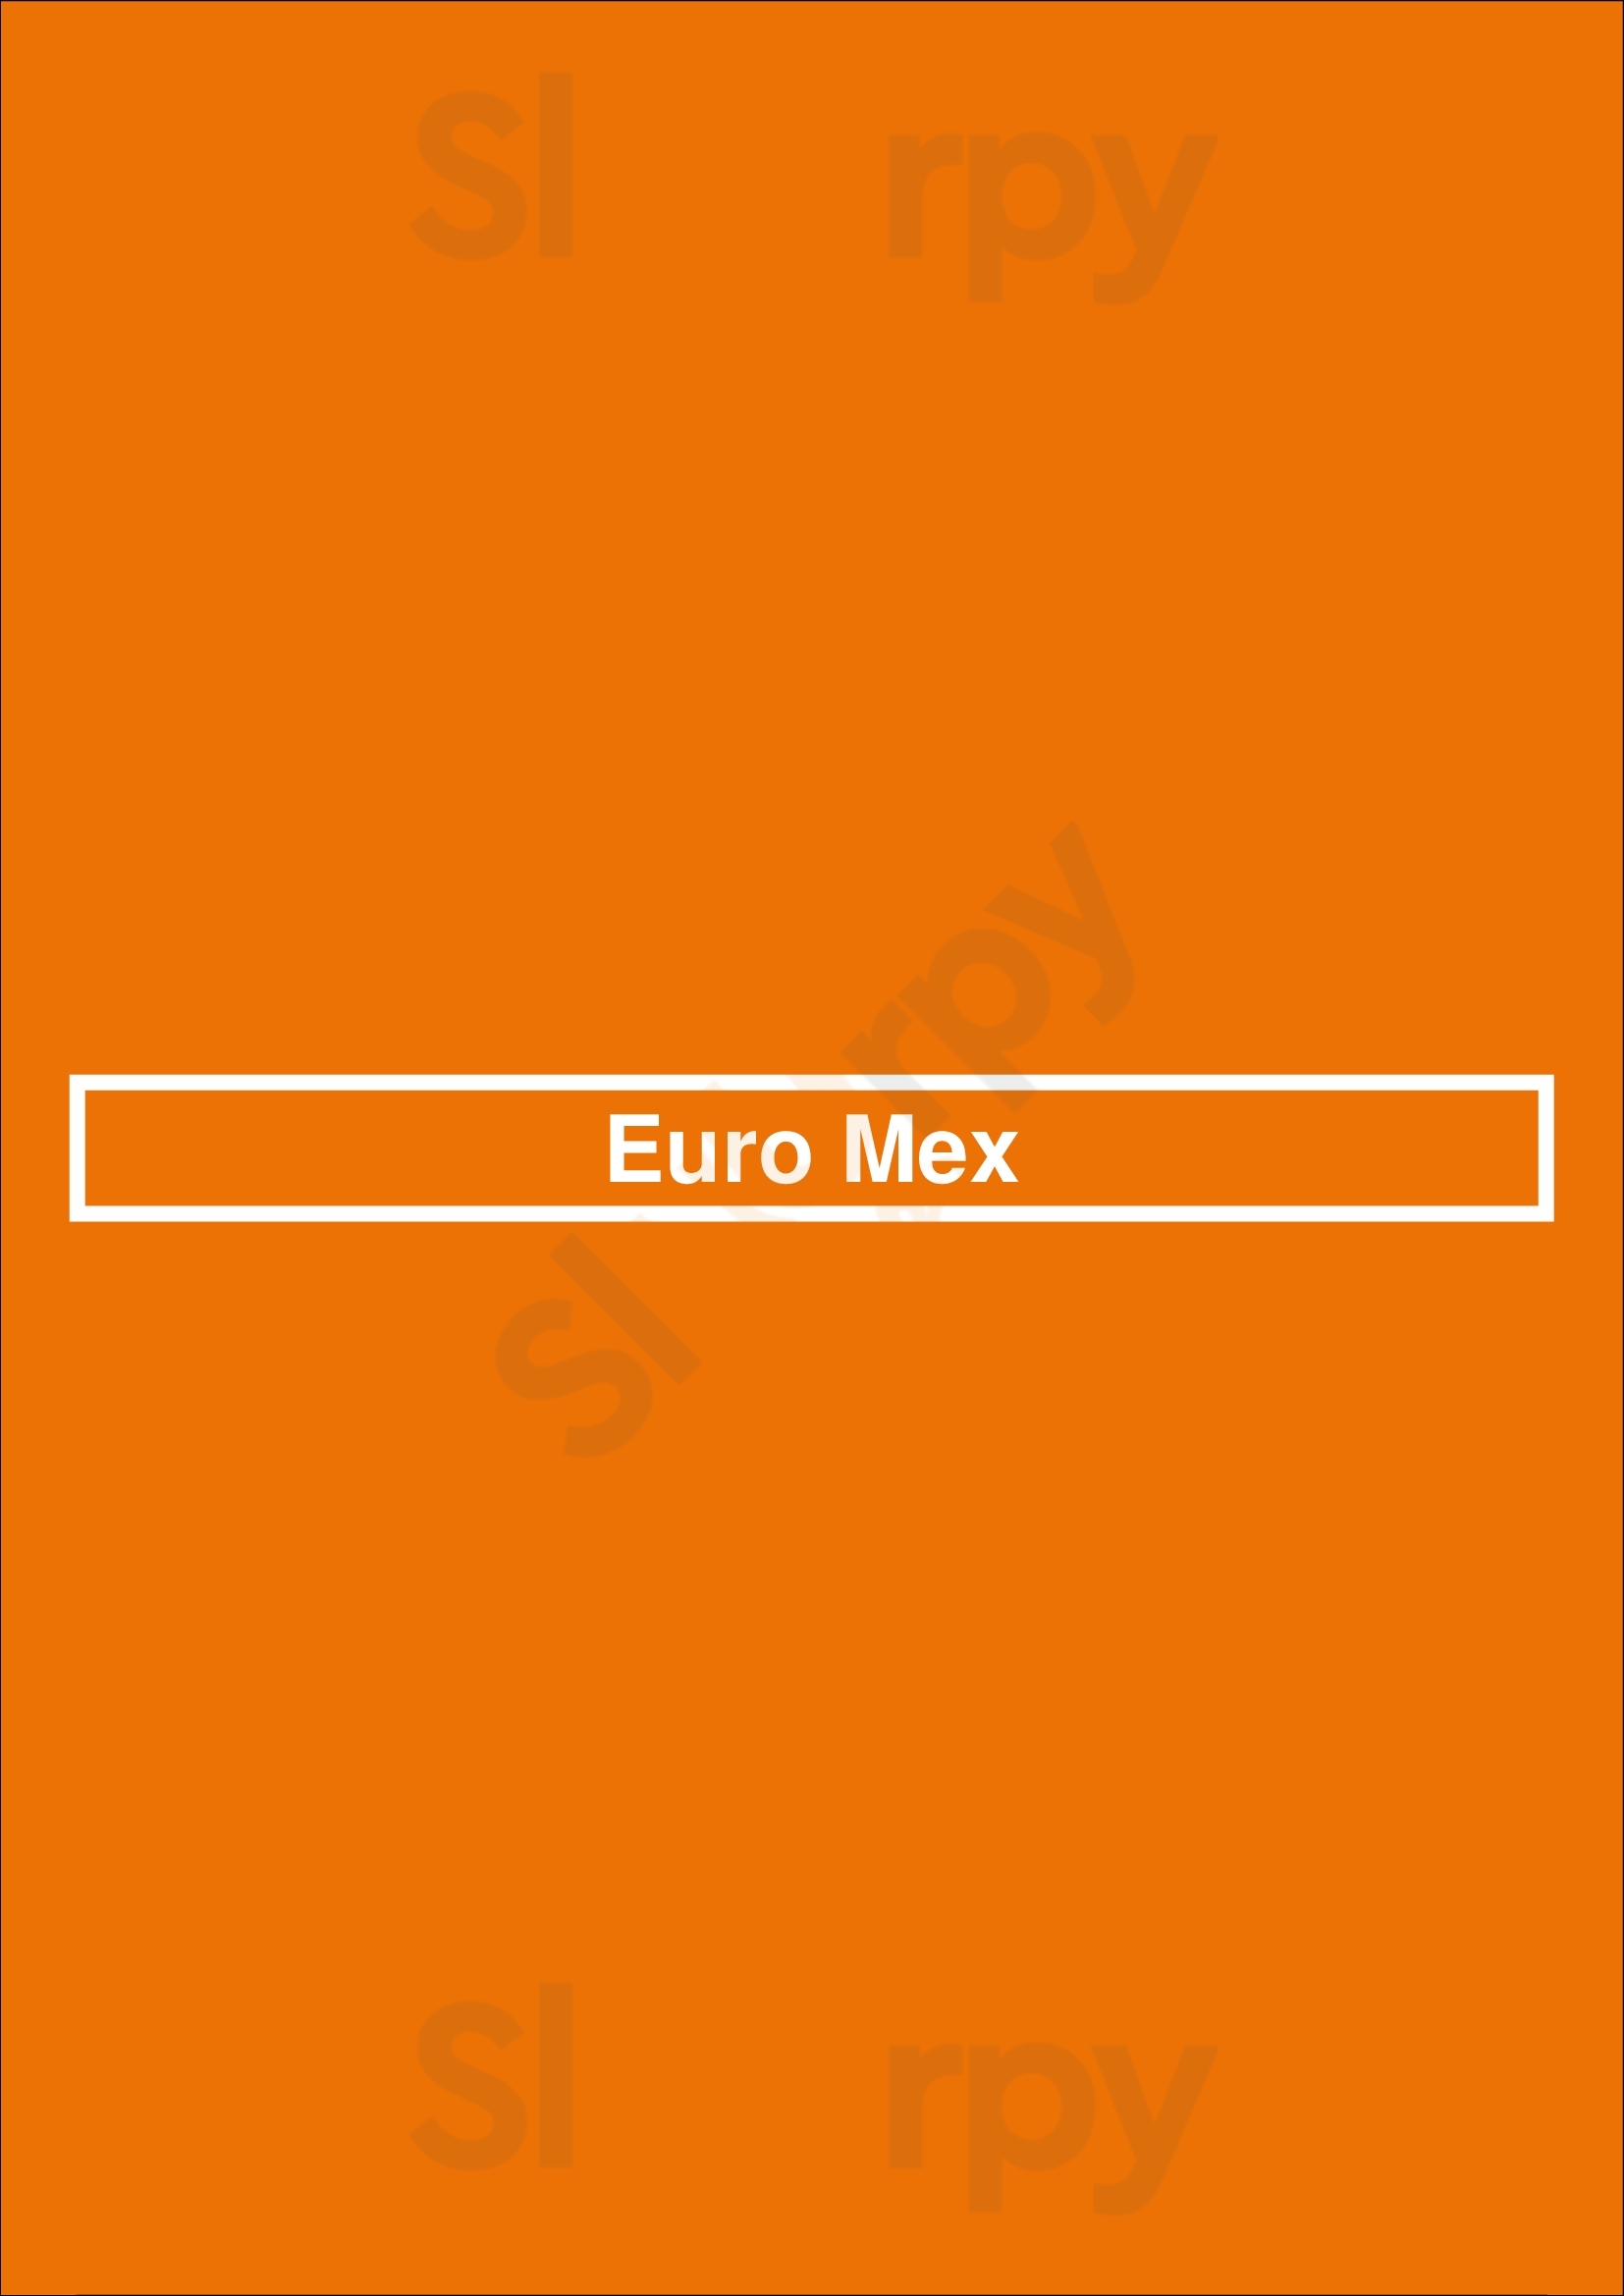 Euro Mex Ottawa Menu - 1